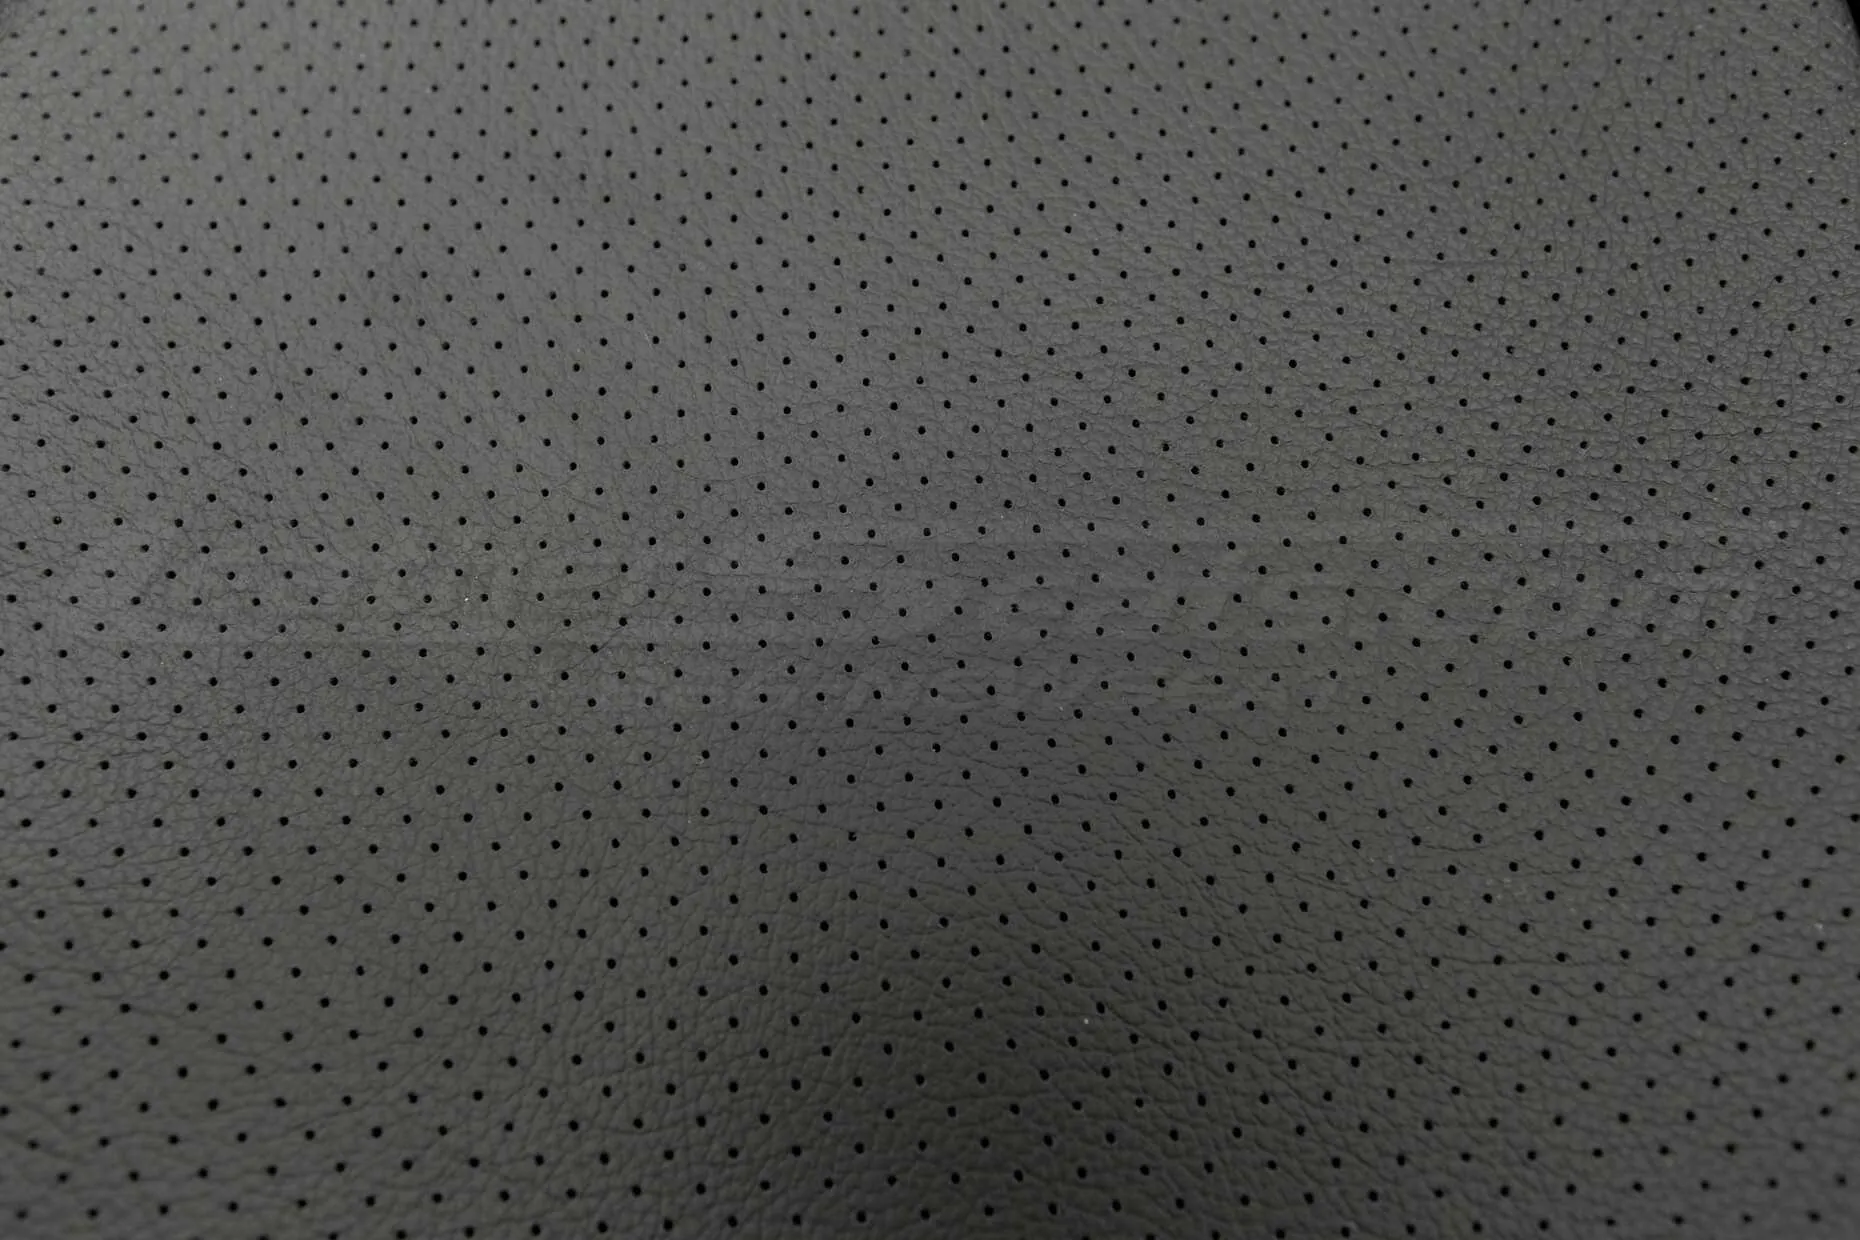 Nissan Titan Upholstery Kit - Black - Perforation close-up